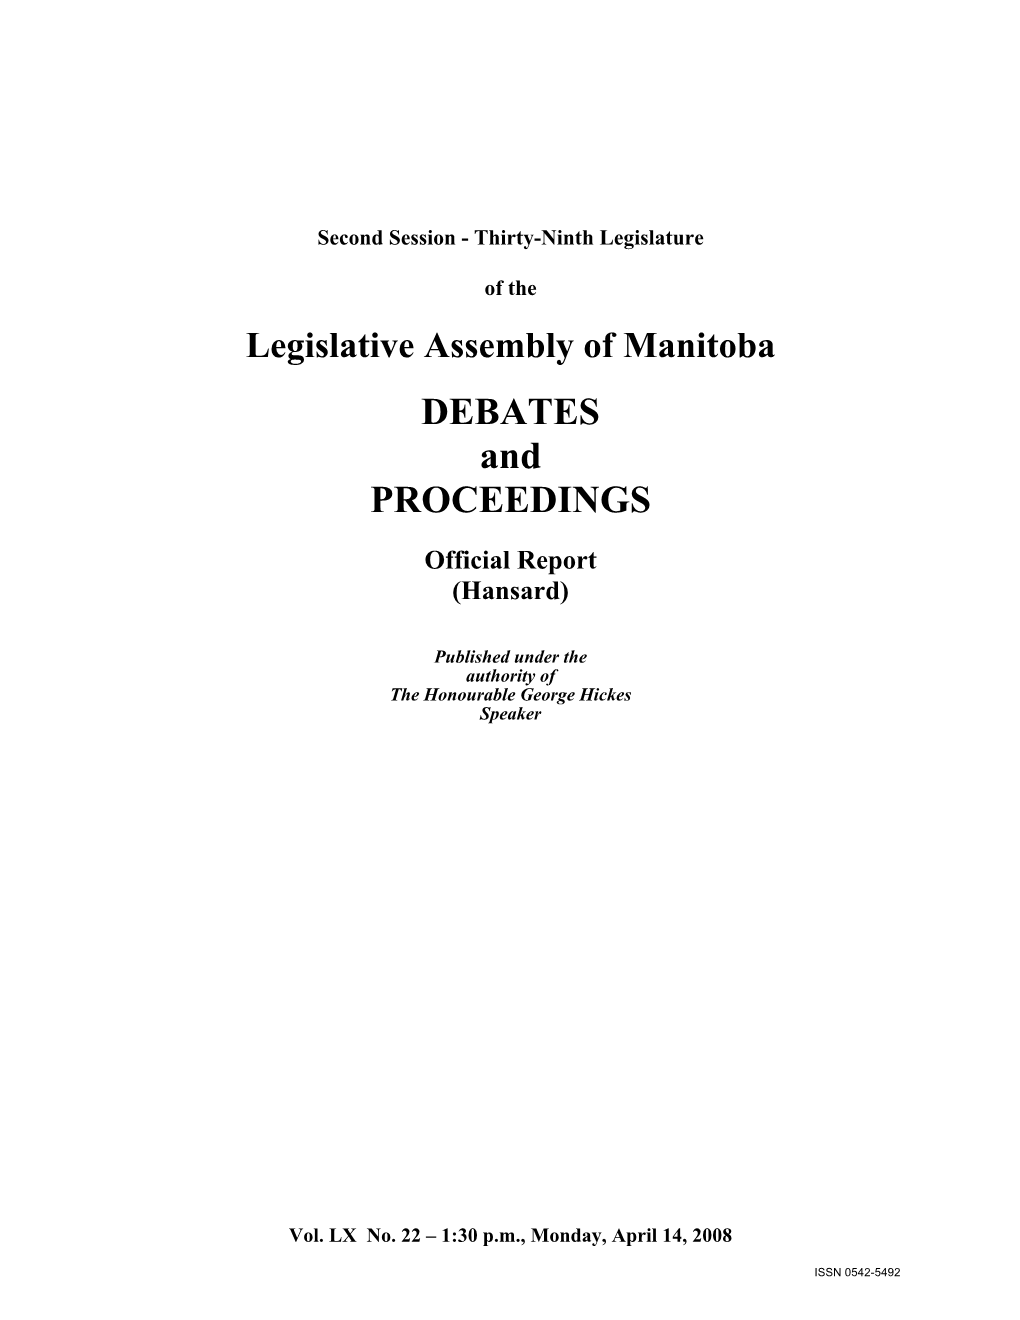 Thirty-Eighth Legislature